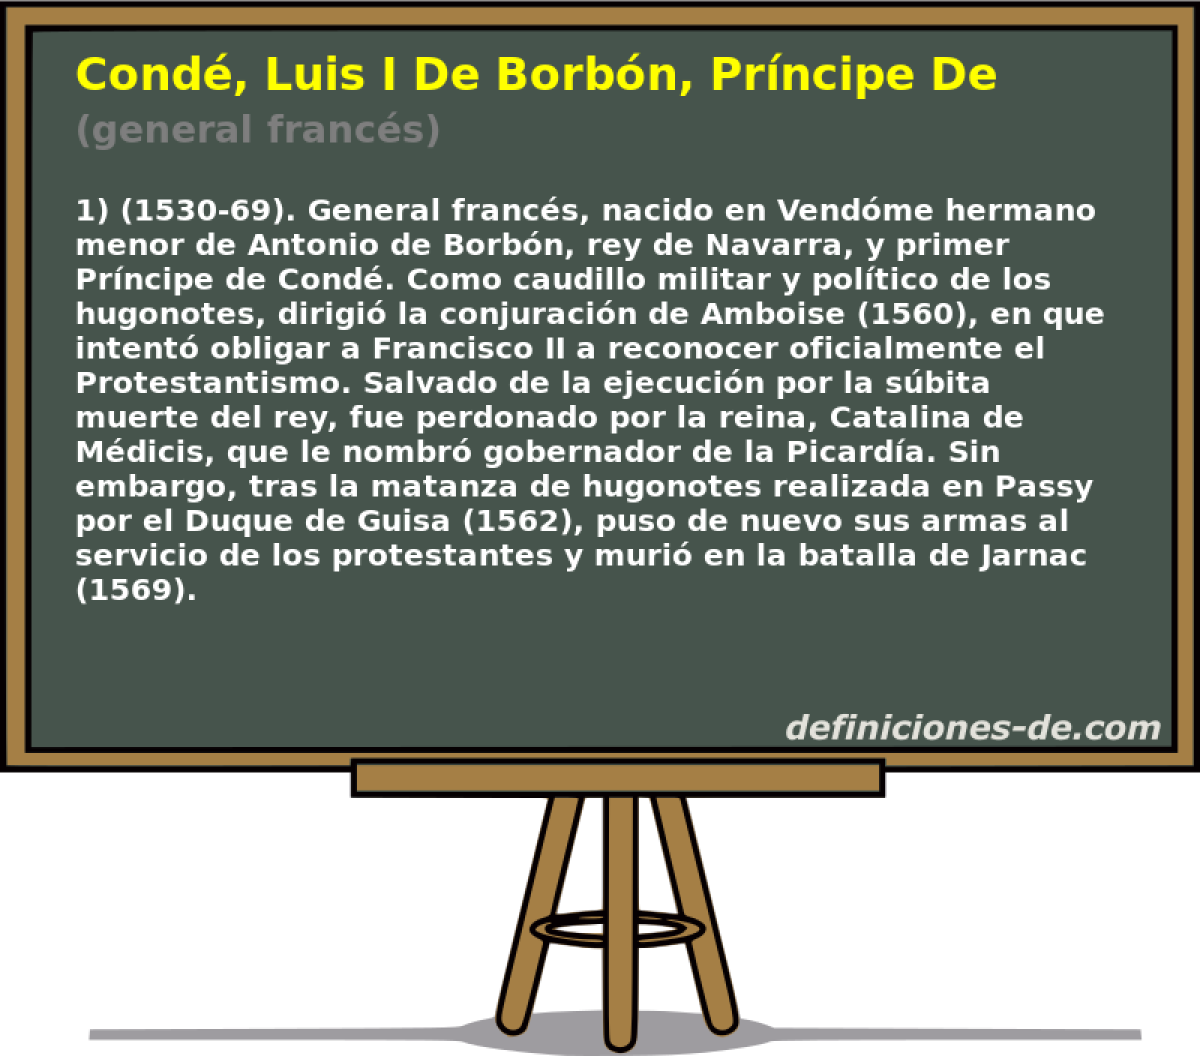 Cond, Luis I De Borbn, Prncipe De (general francs)